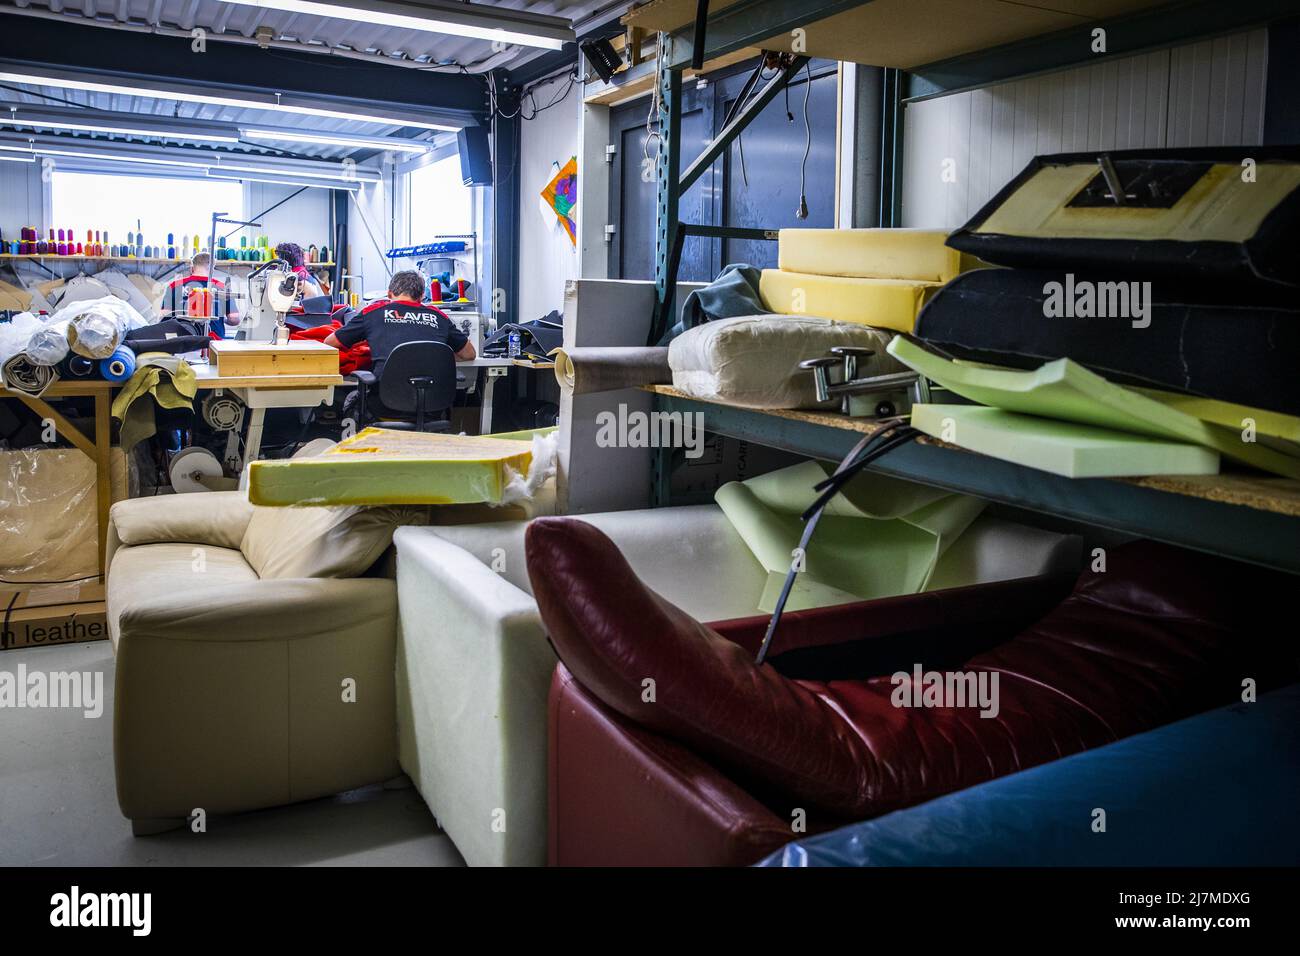 Mobiliario usado fotografías e imágenes de alta resolución - Alamy